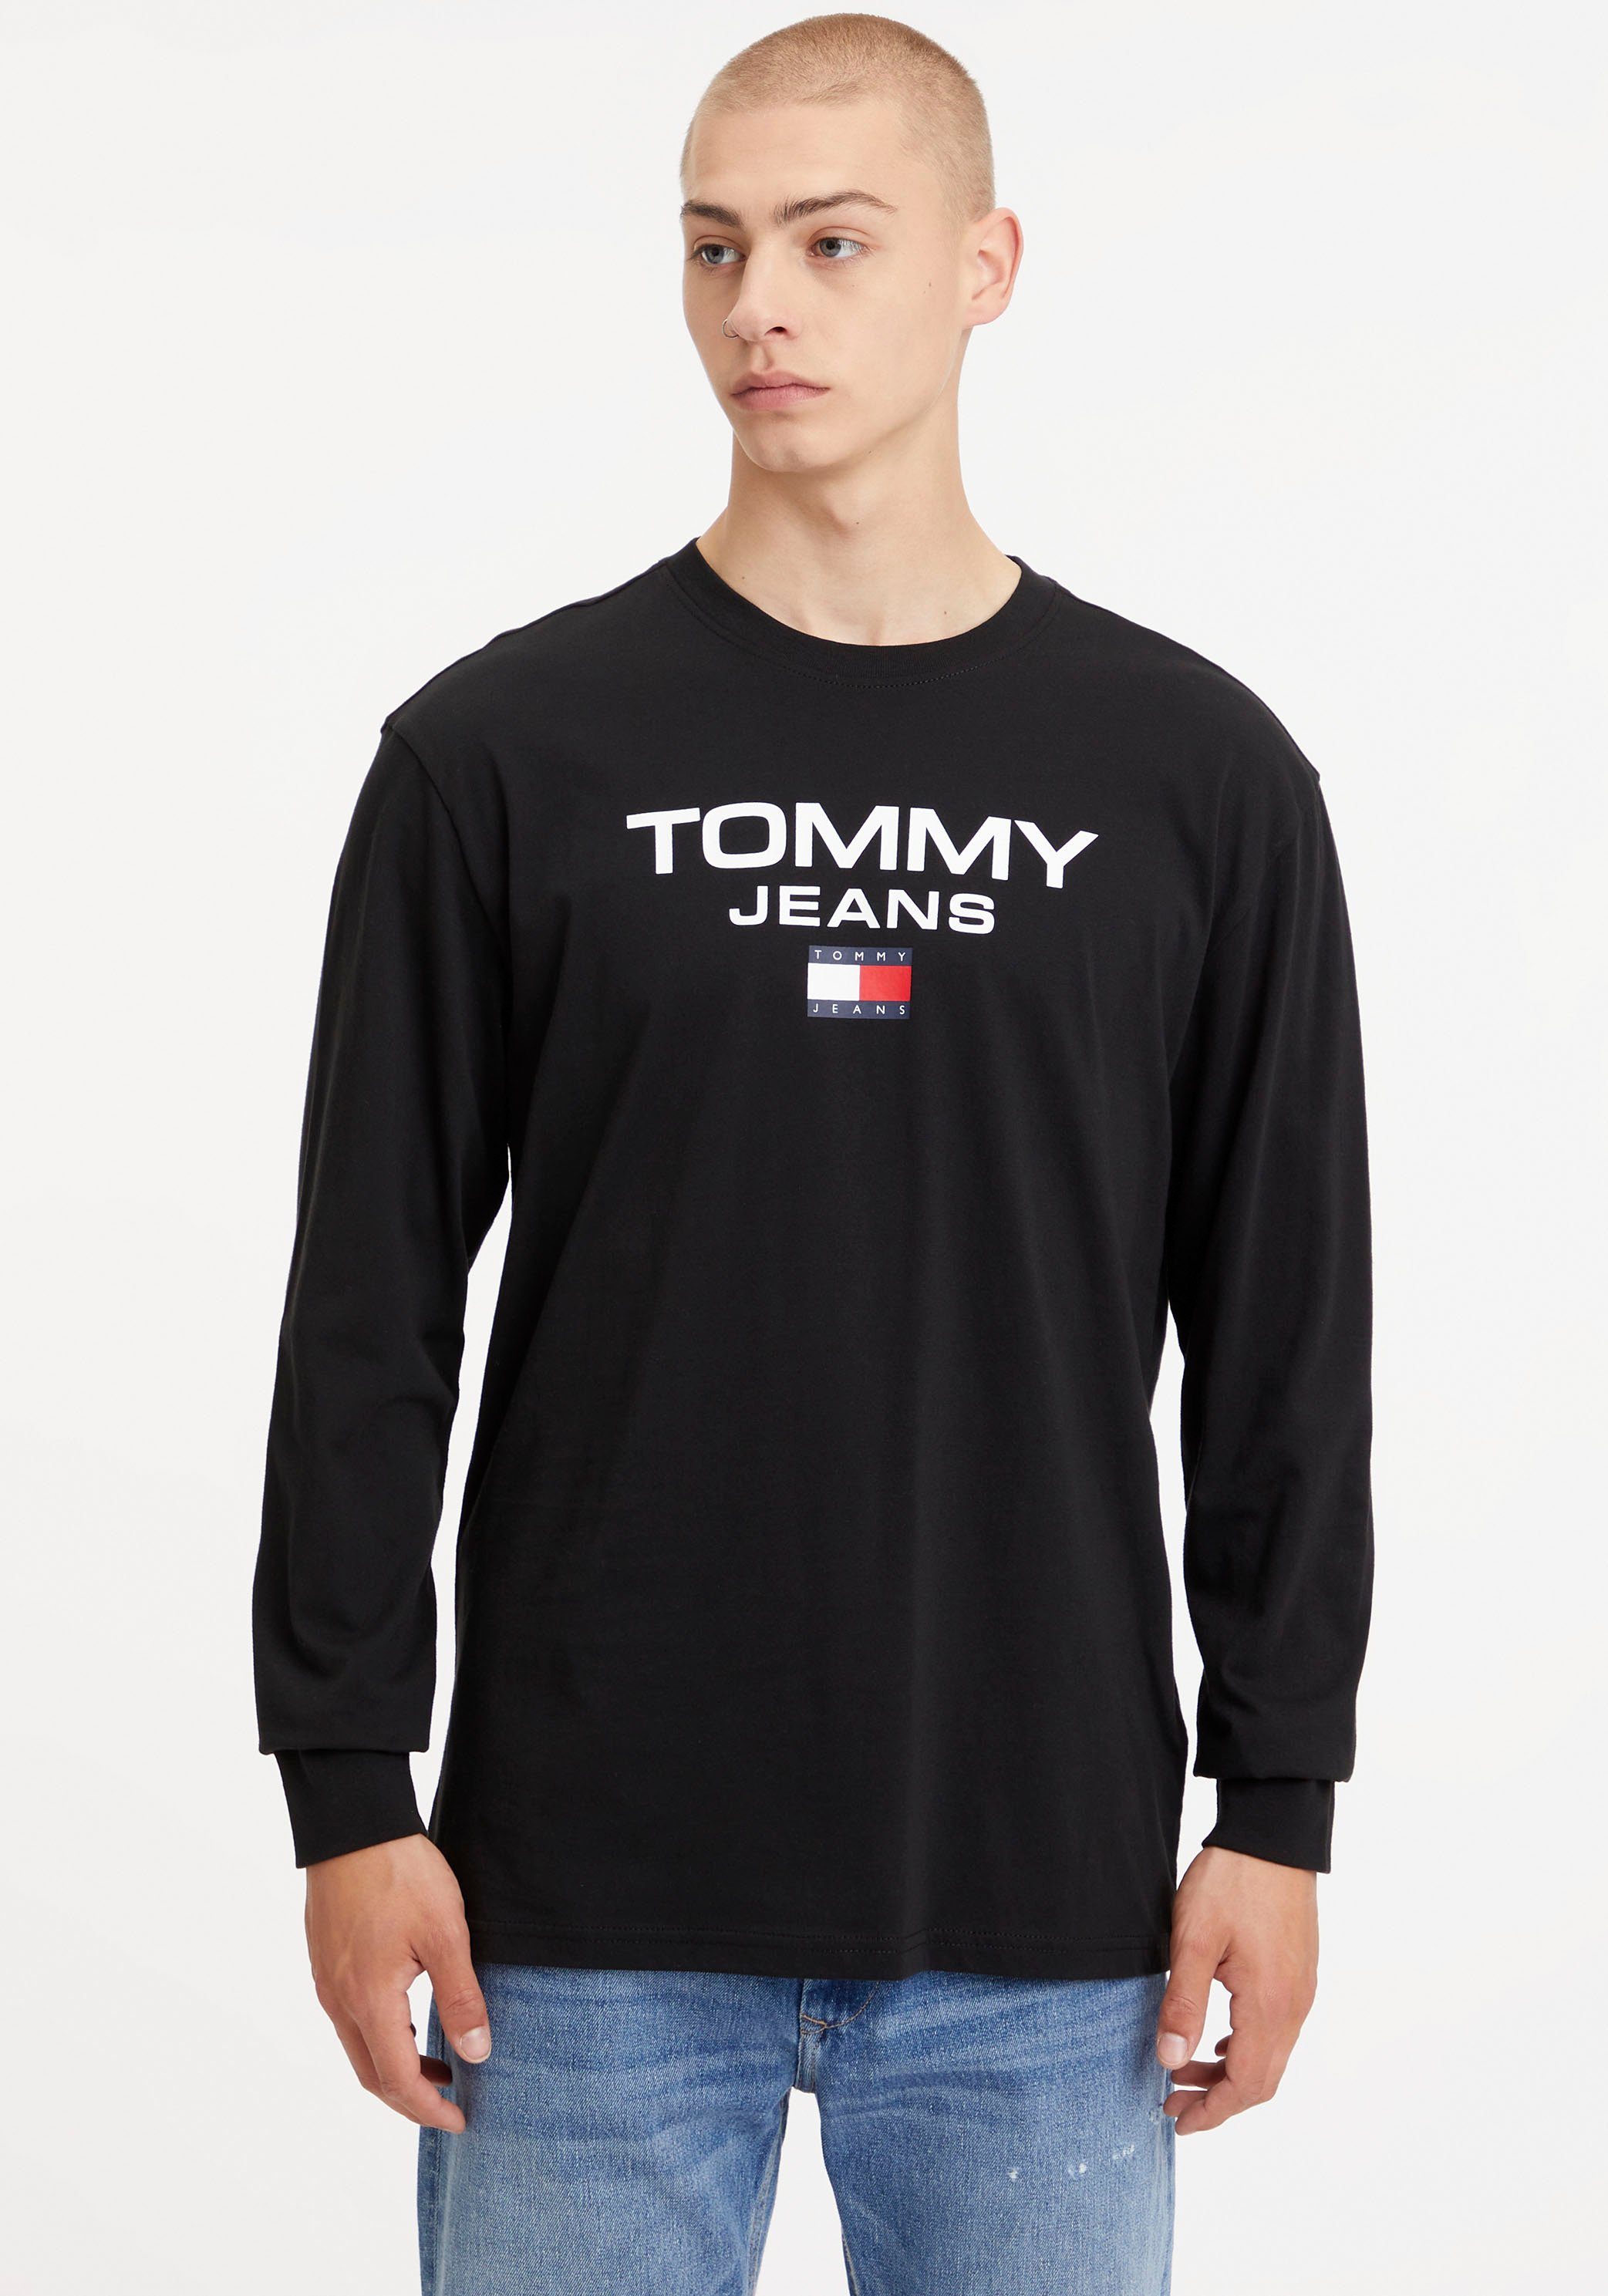 Tommy Jeans Herren Langarmshirts » Longsleeves online kaufen | OTTO